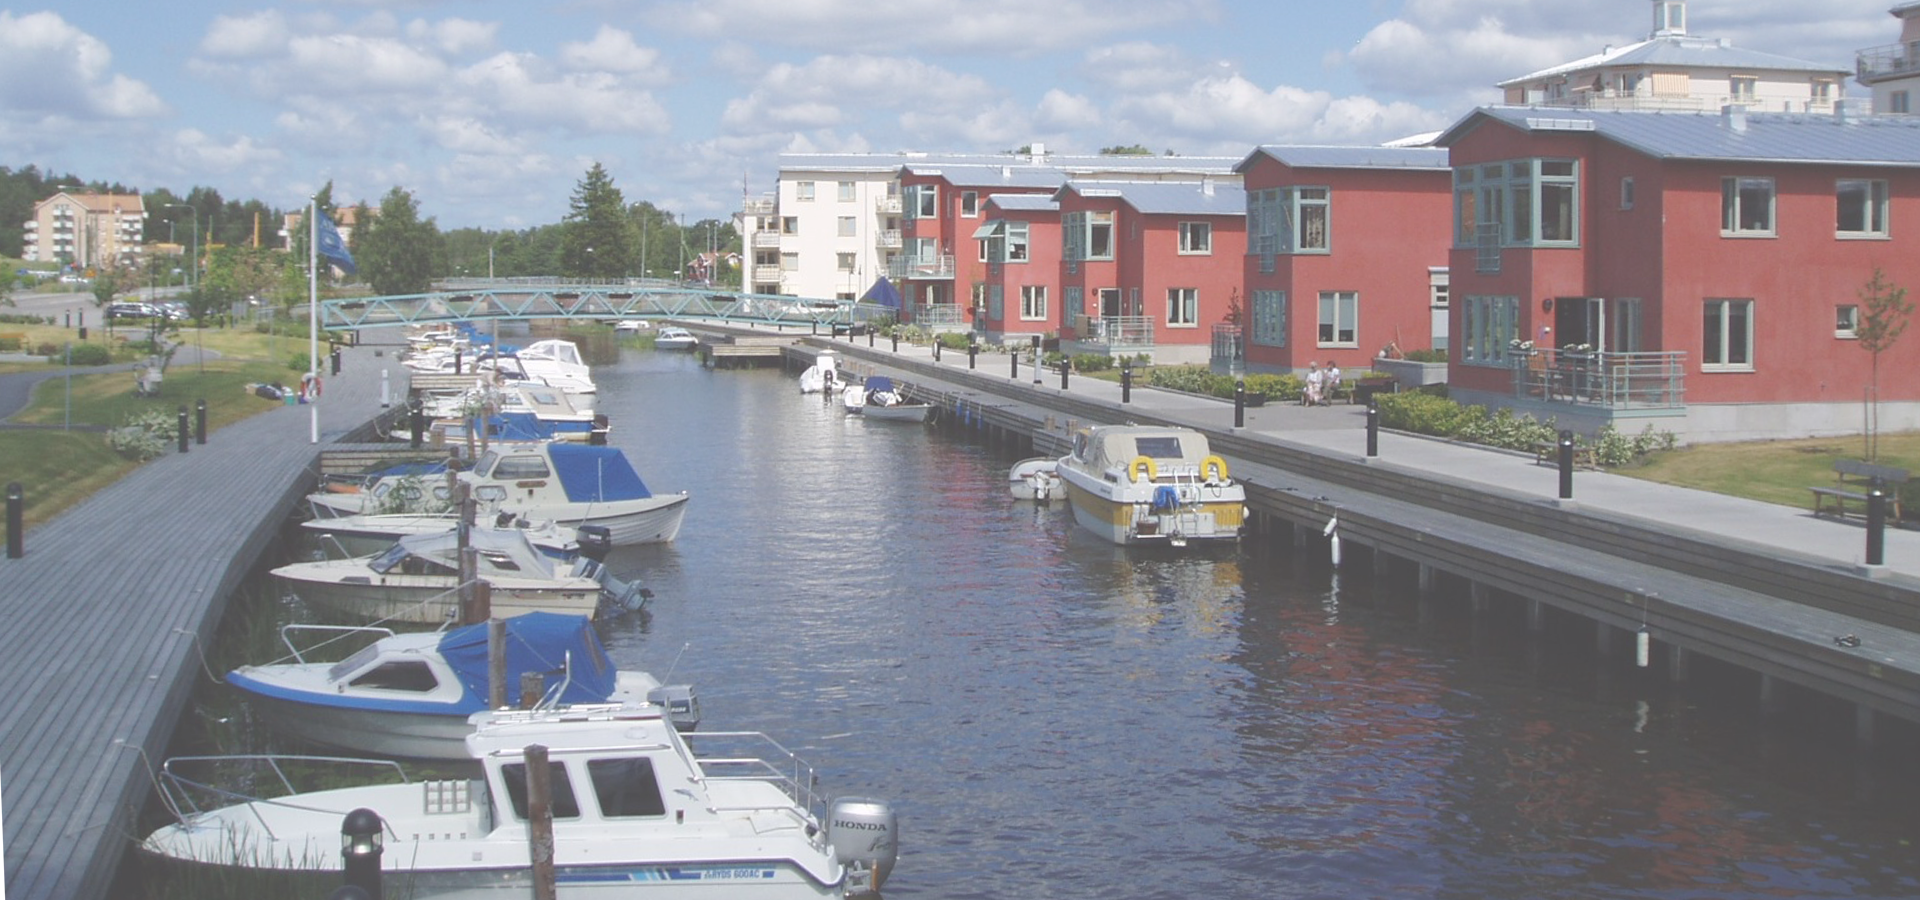 <b>Åkersberga, Stockholm County, Uppland Province, Sweden</b>